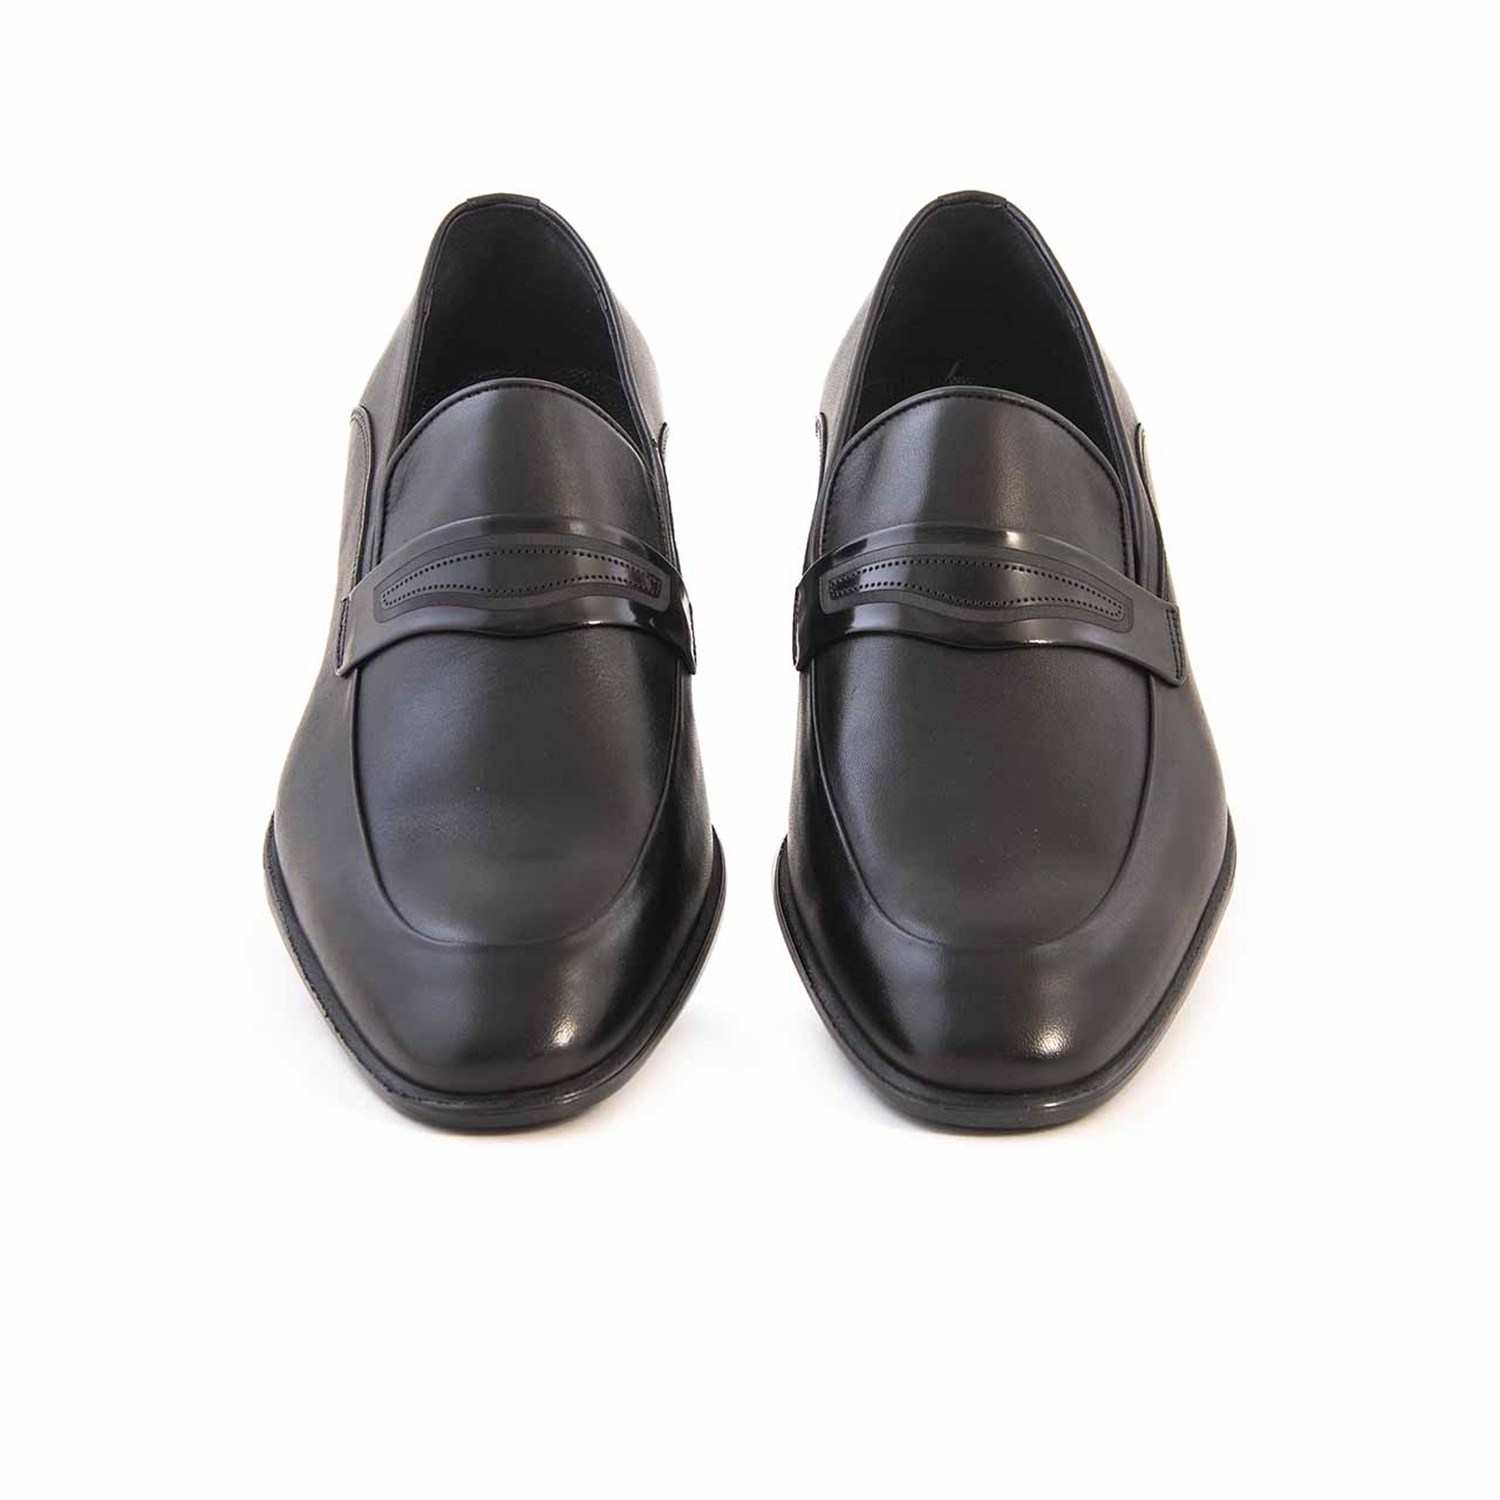 Kemal Tanca Leather Laceless Men's Classic Shoes 2083